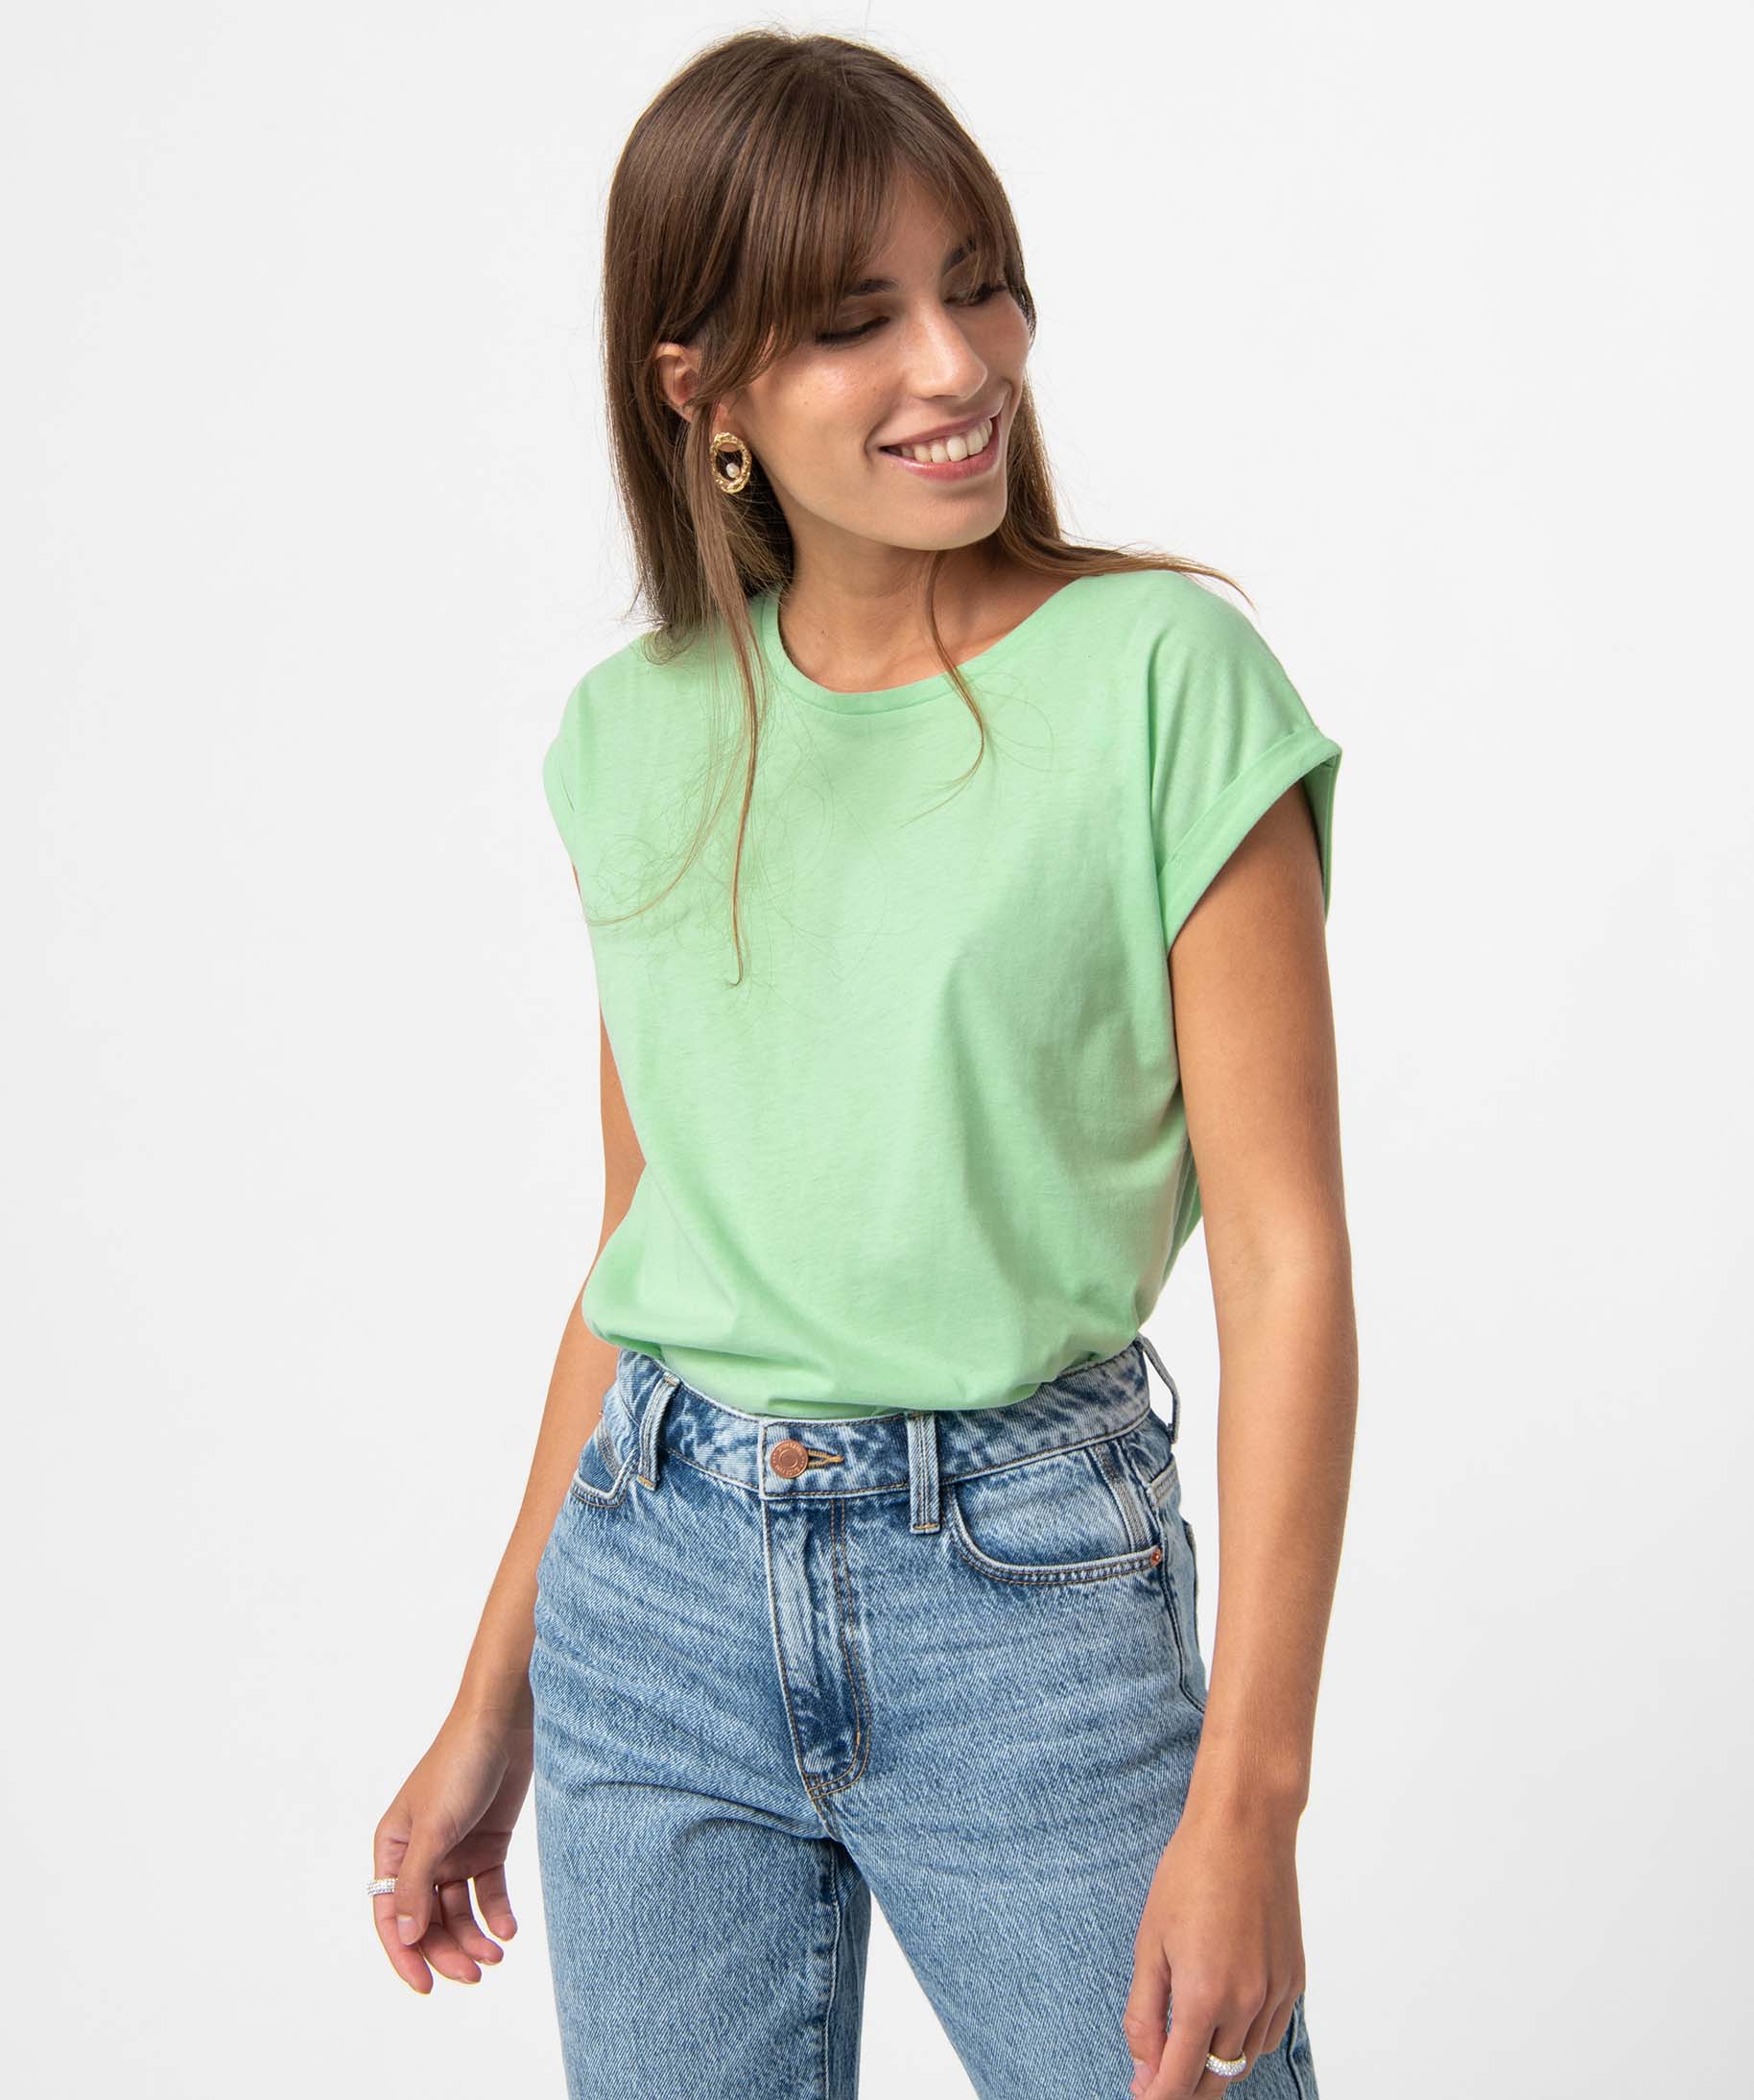 tee-shirt femme a manches courtes avec revers vert t-shirts manches courtes